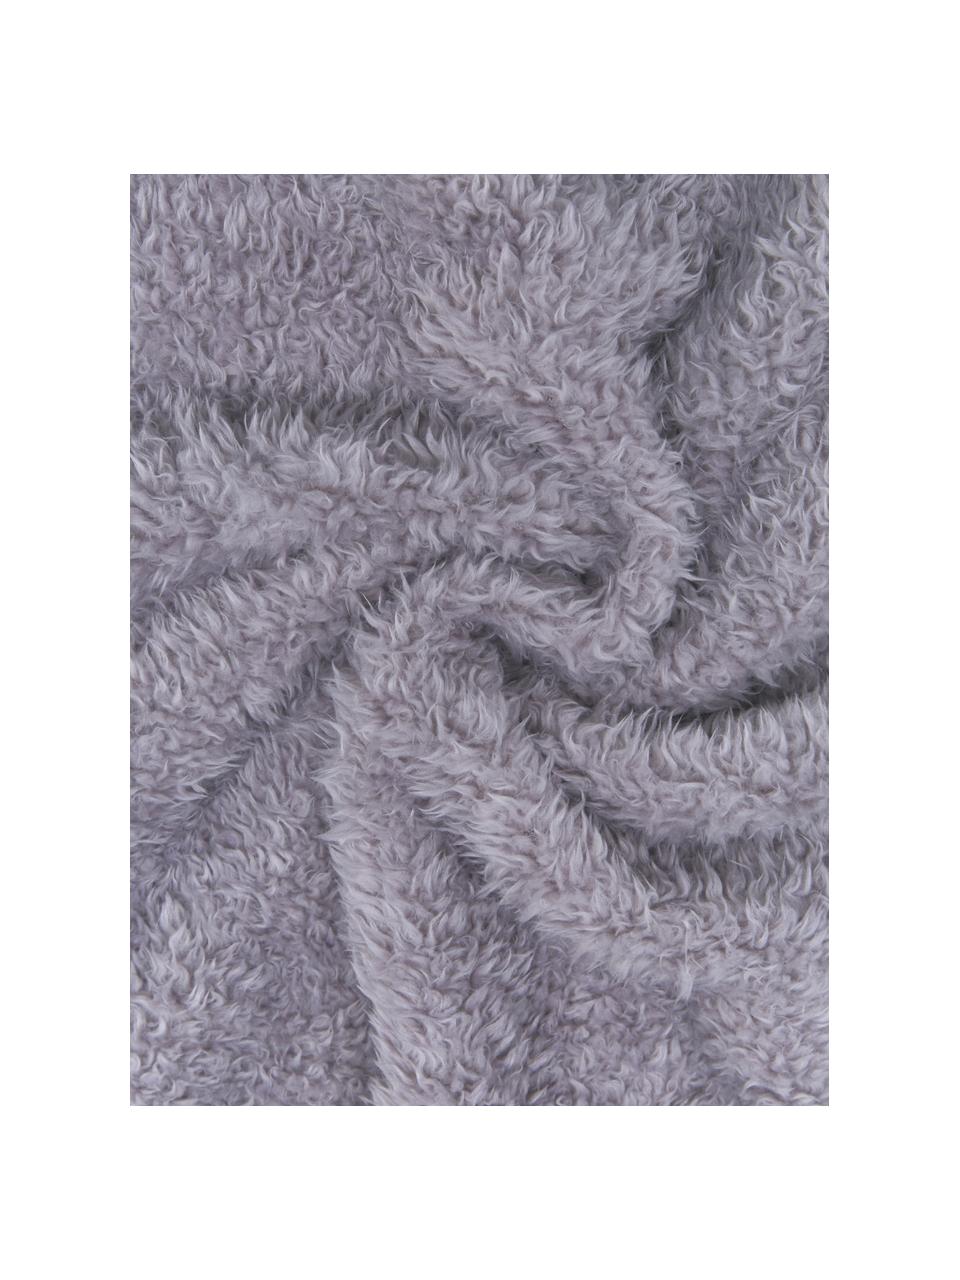 Kuscheldecke Tedy in Lila, 100% polyester, Lila, B 120 x L 180 cm